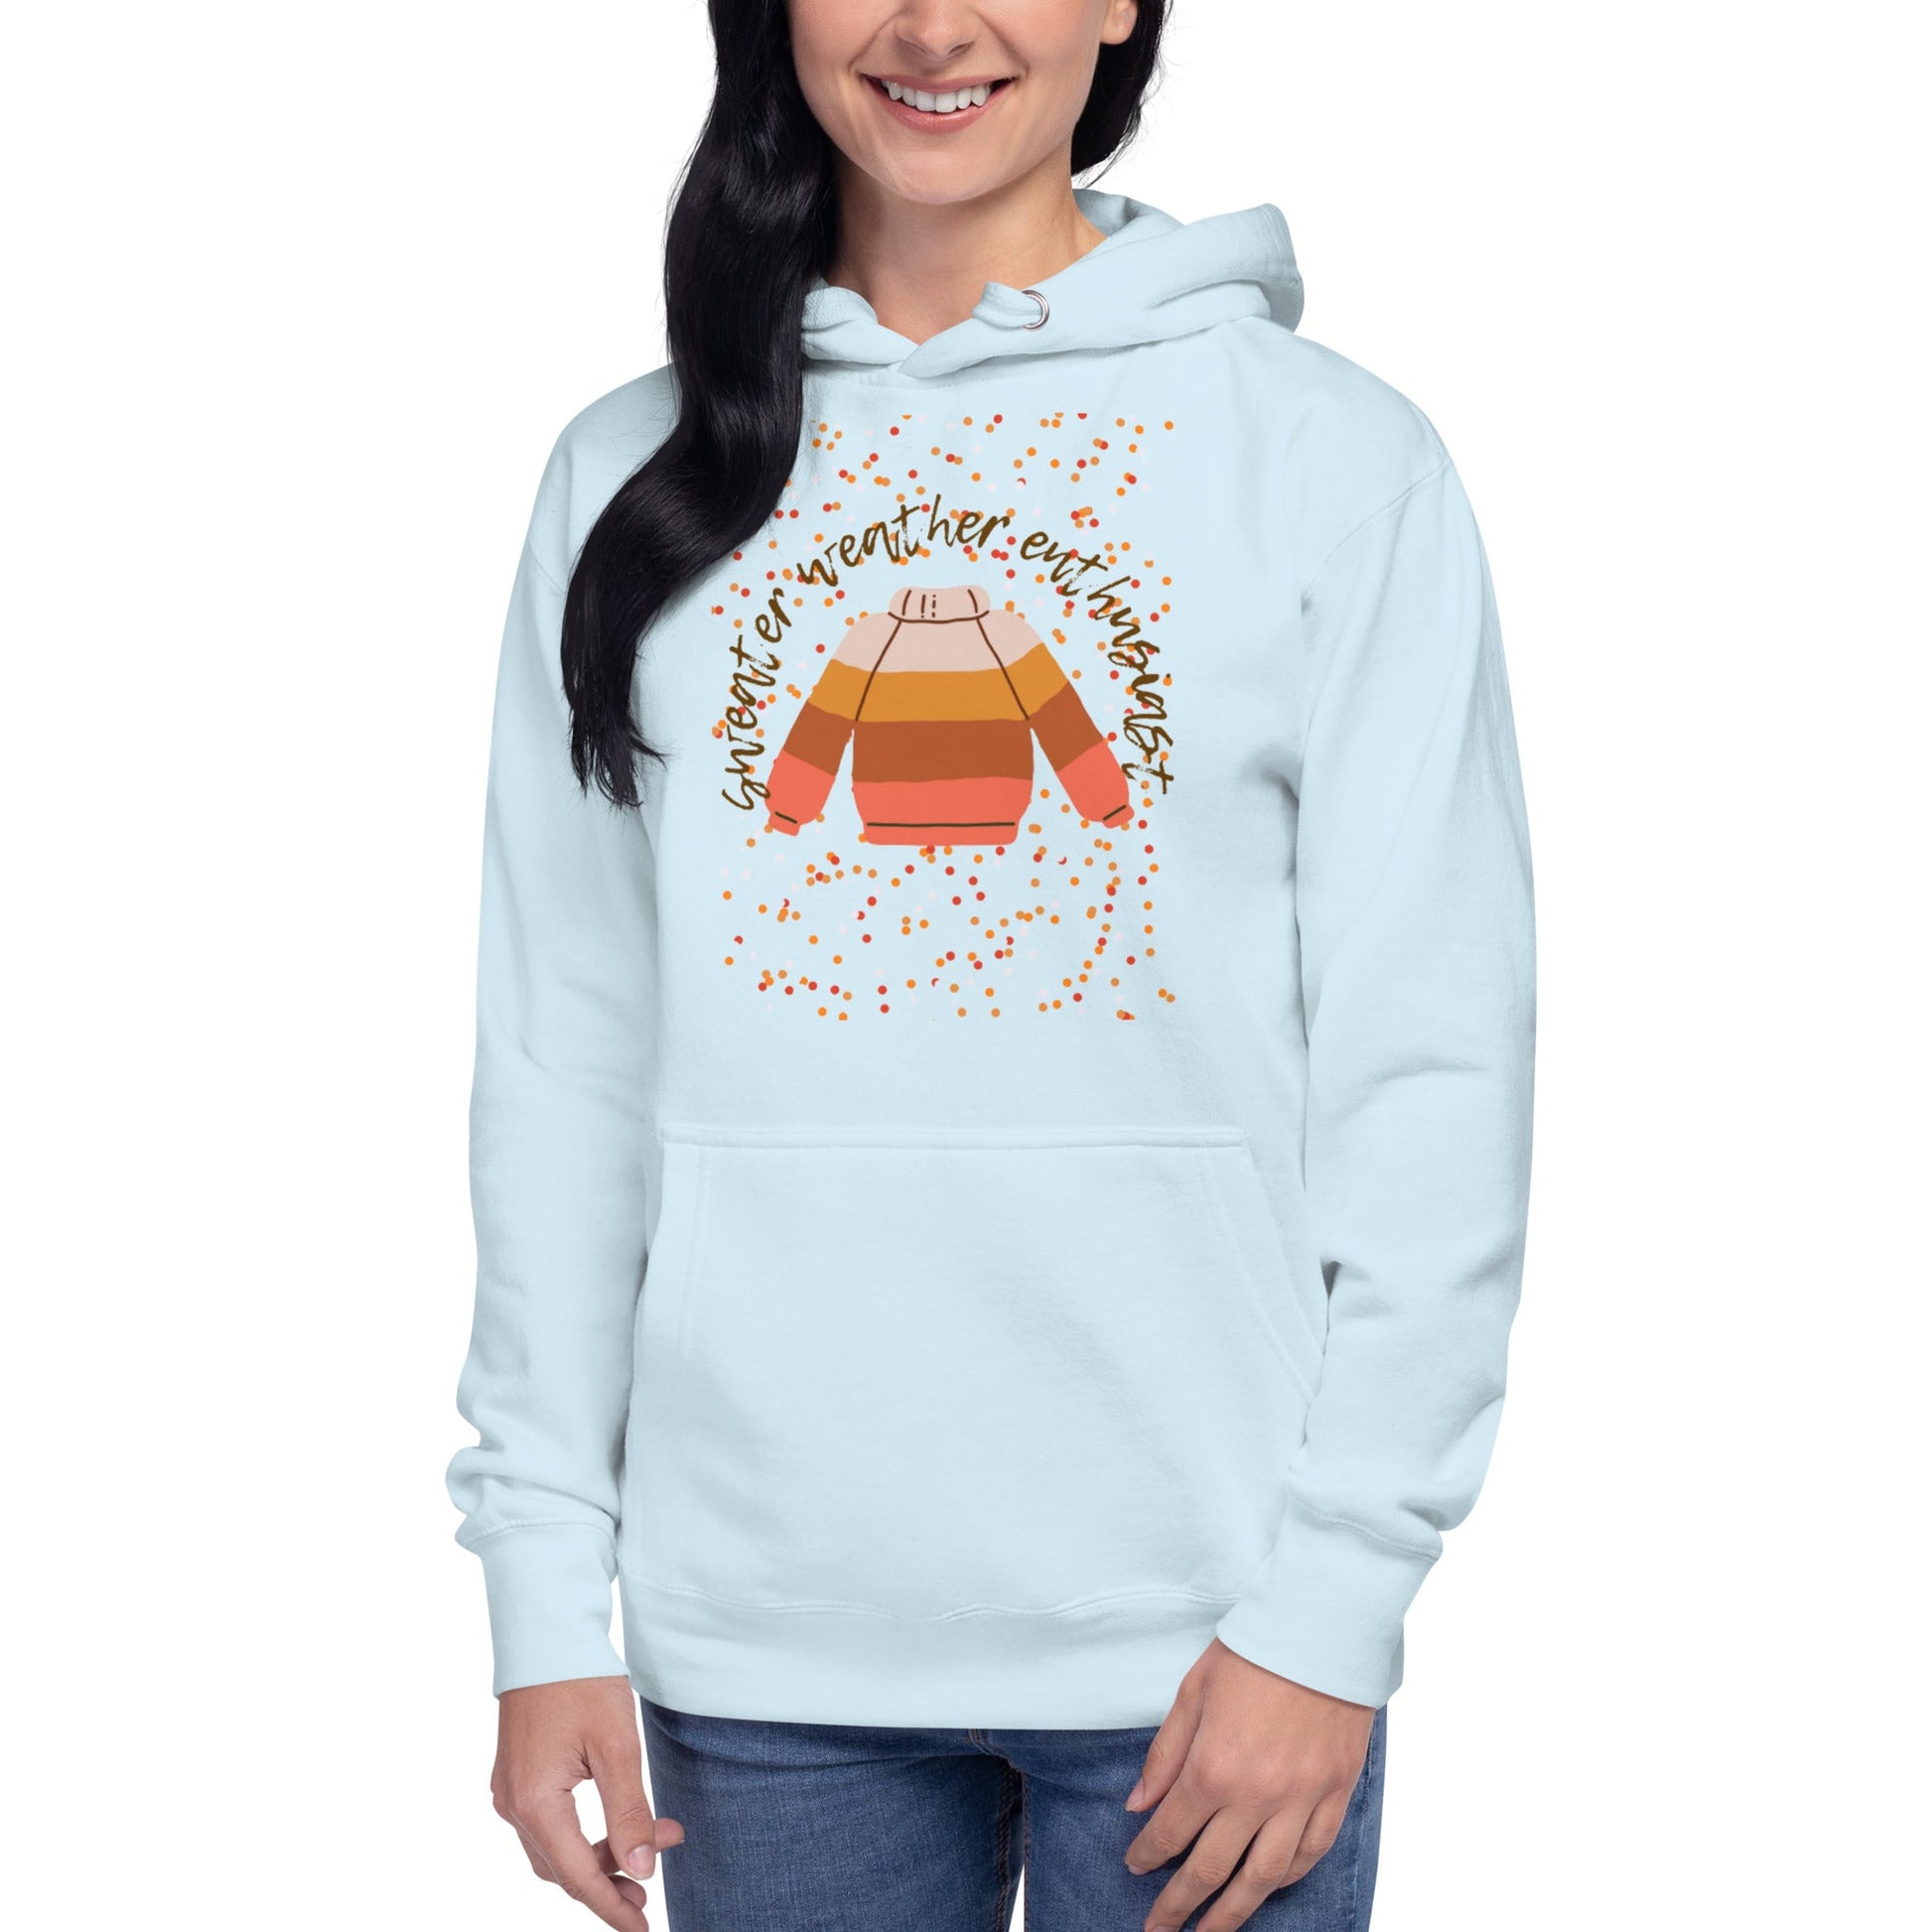 Sweater Weather Enthusiast  Unisex Hoodie